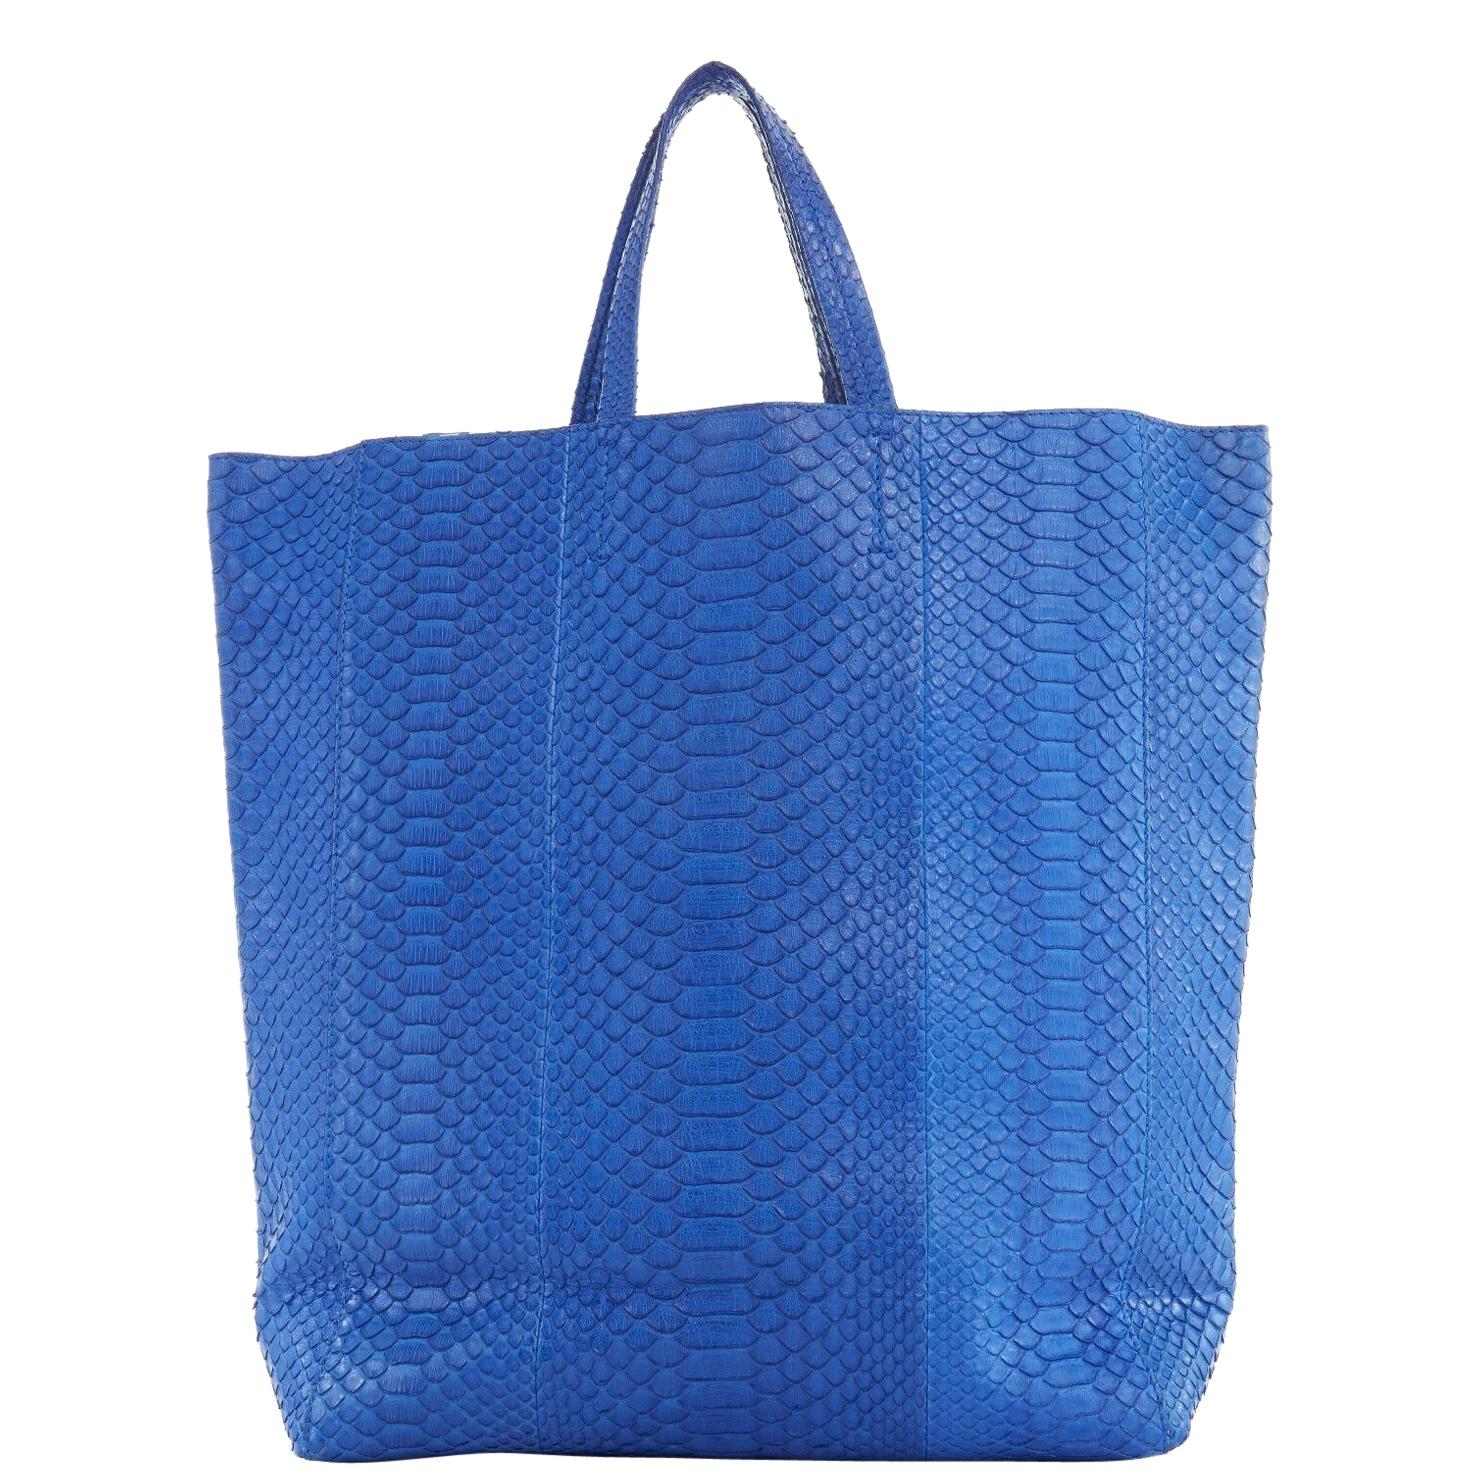 CELINE PHOEBE PHILO Cabas cobalt blue python leather verticle tote shopper bag